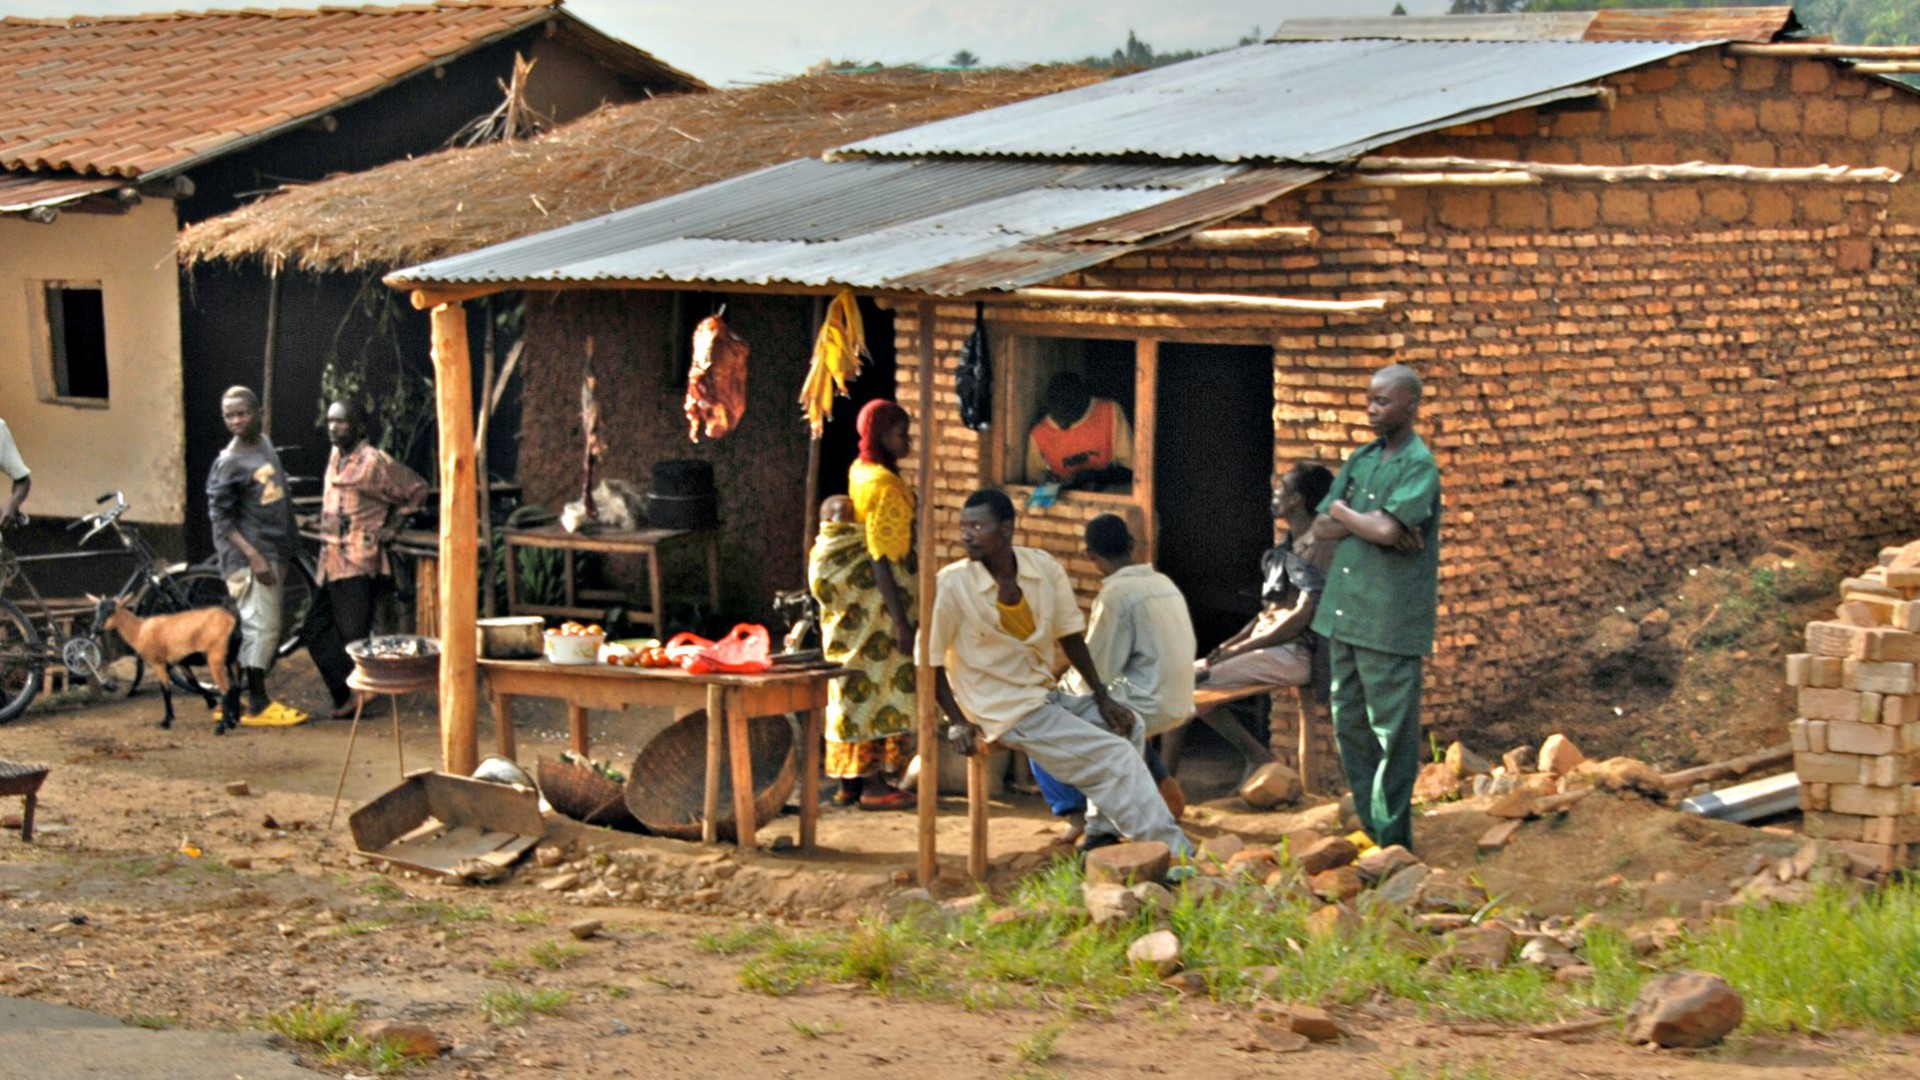 Les tensions sont toujours vivaces au Burundi (Photo:Dave Proffer/Flickr/CC BY 2.0)